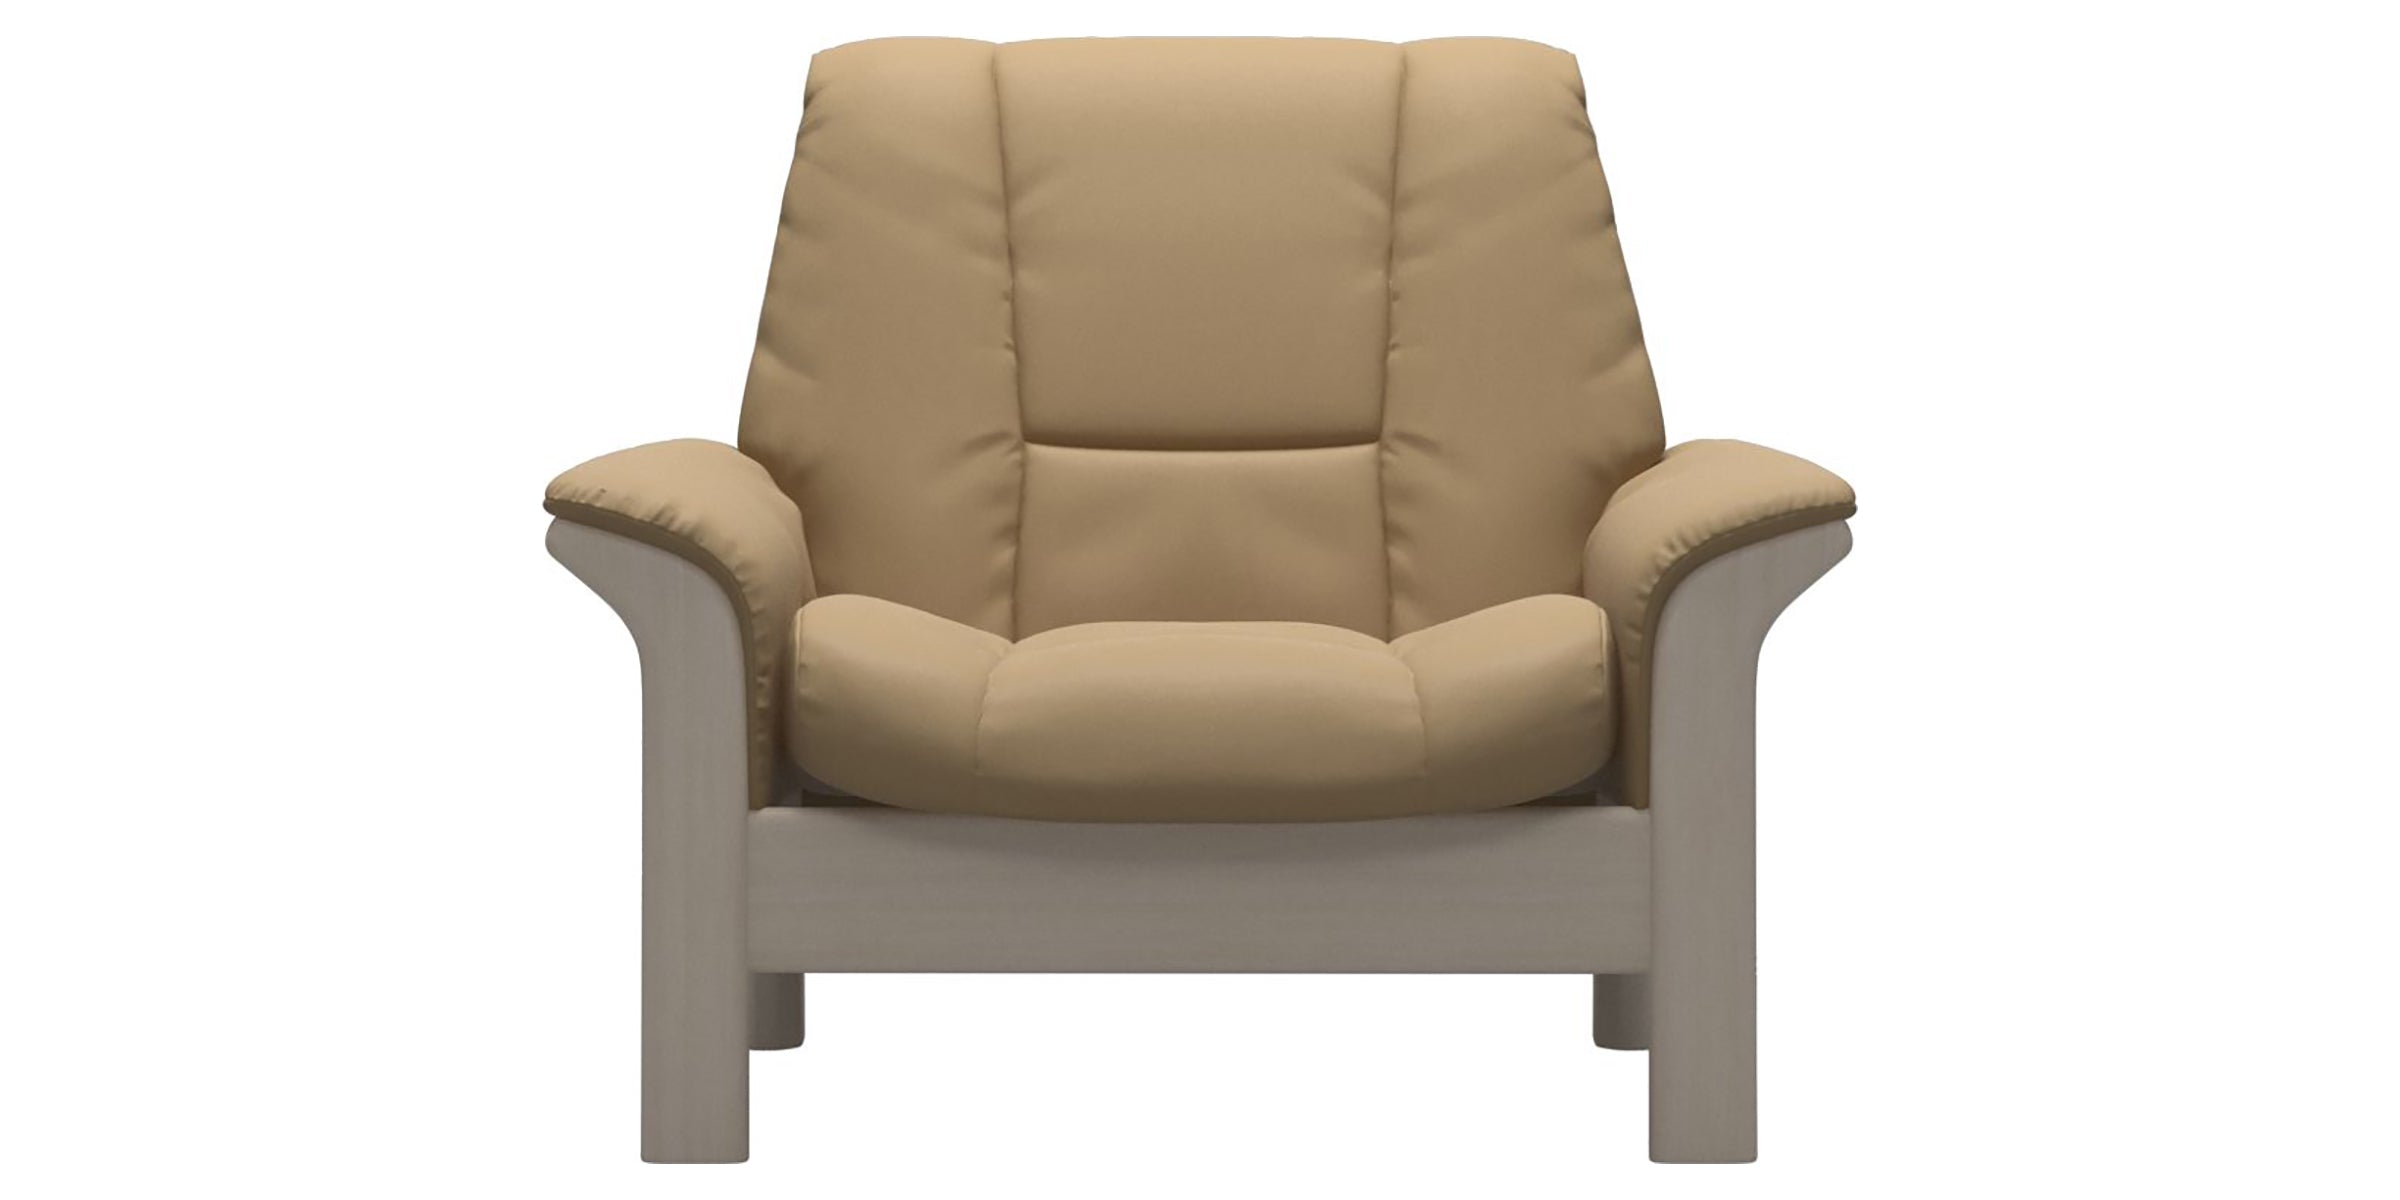 Paloma Leather Sand and Whitewash Base | Stressless Buckingham Low Back Chair | Valley Ridge Furniture